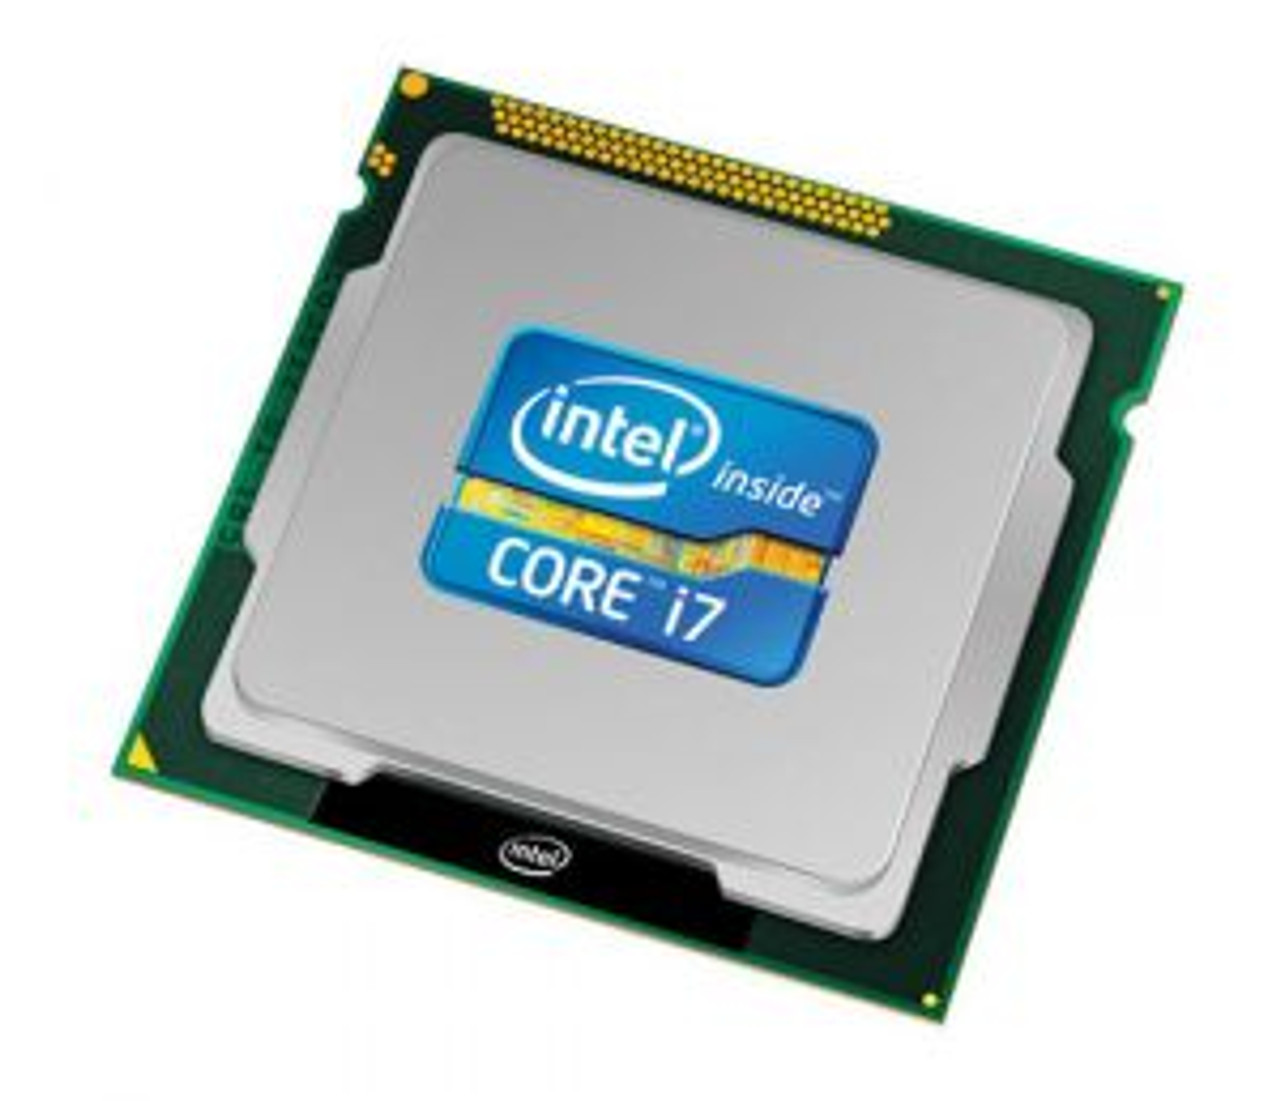 CW8064701486306 Intel Core i7-4600M Dual Core 2.90GHz 5